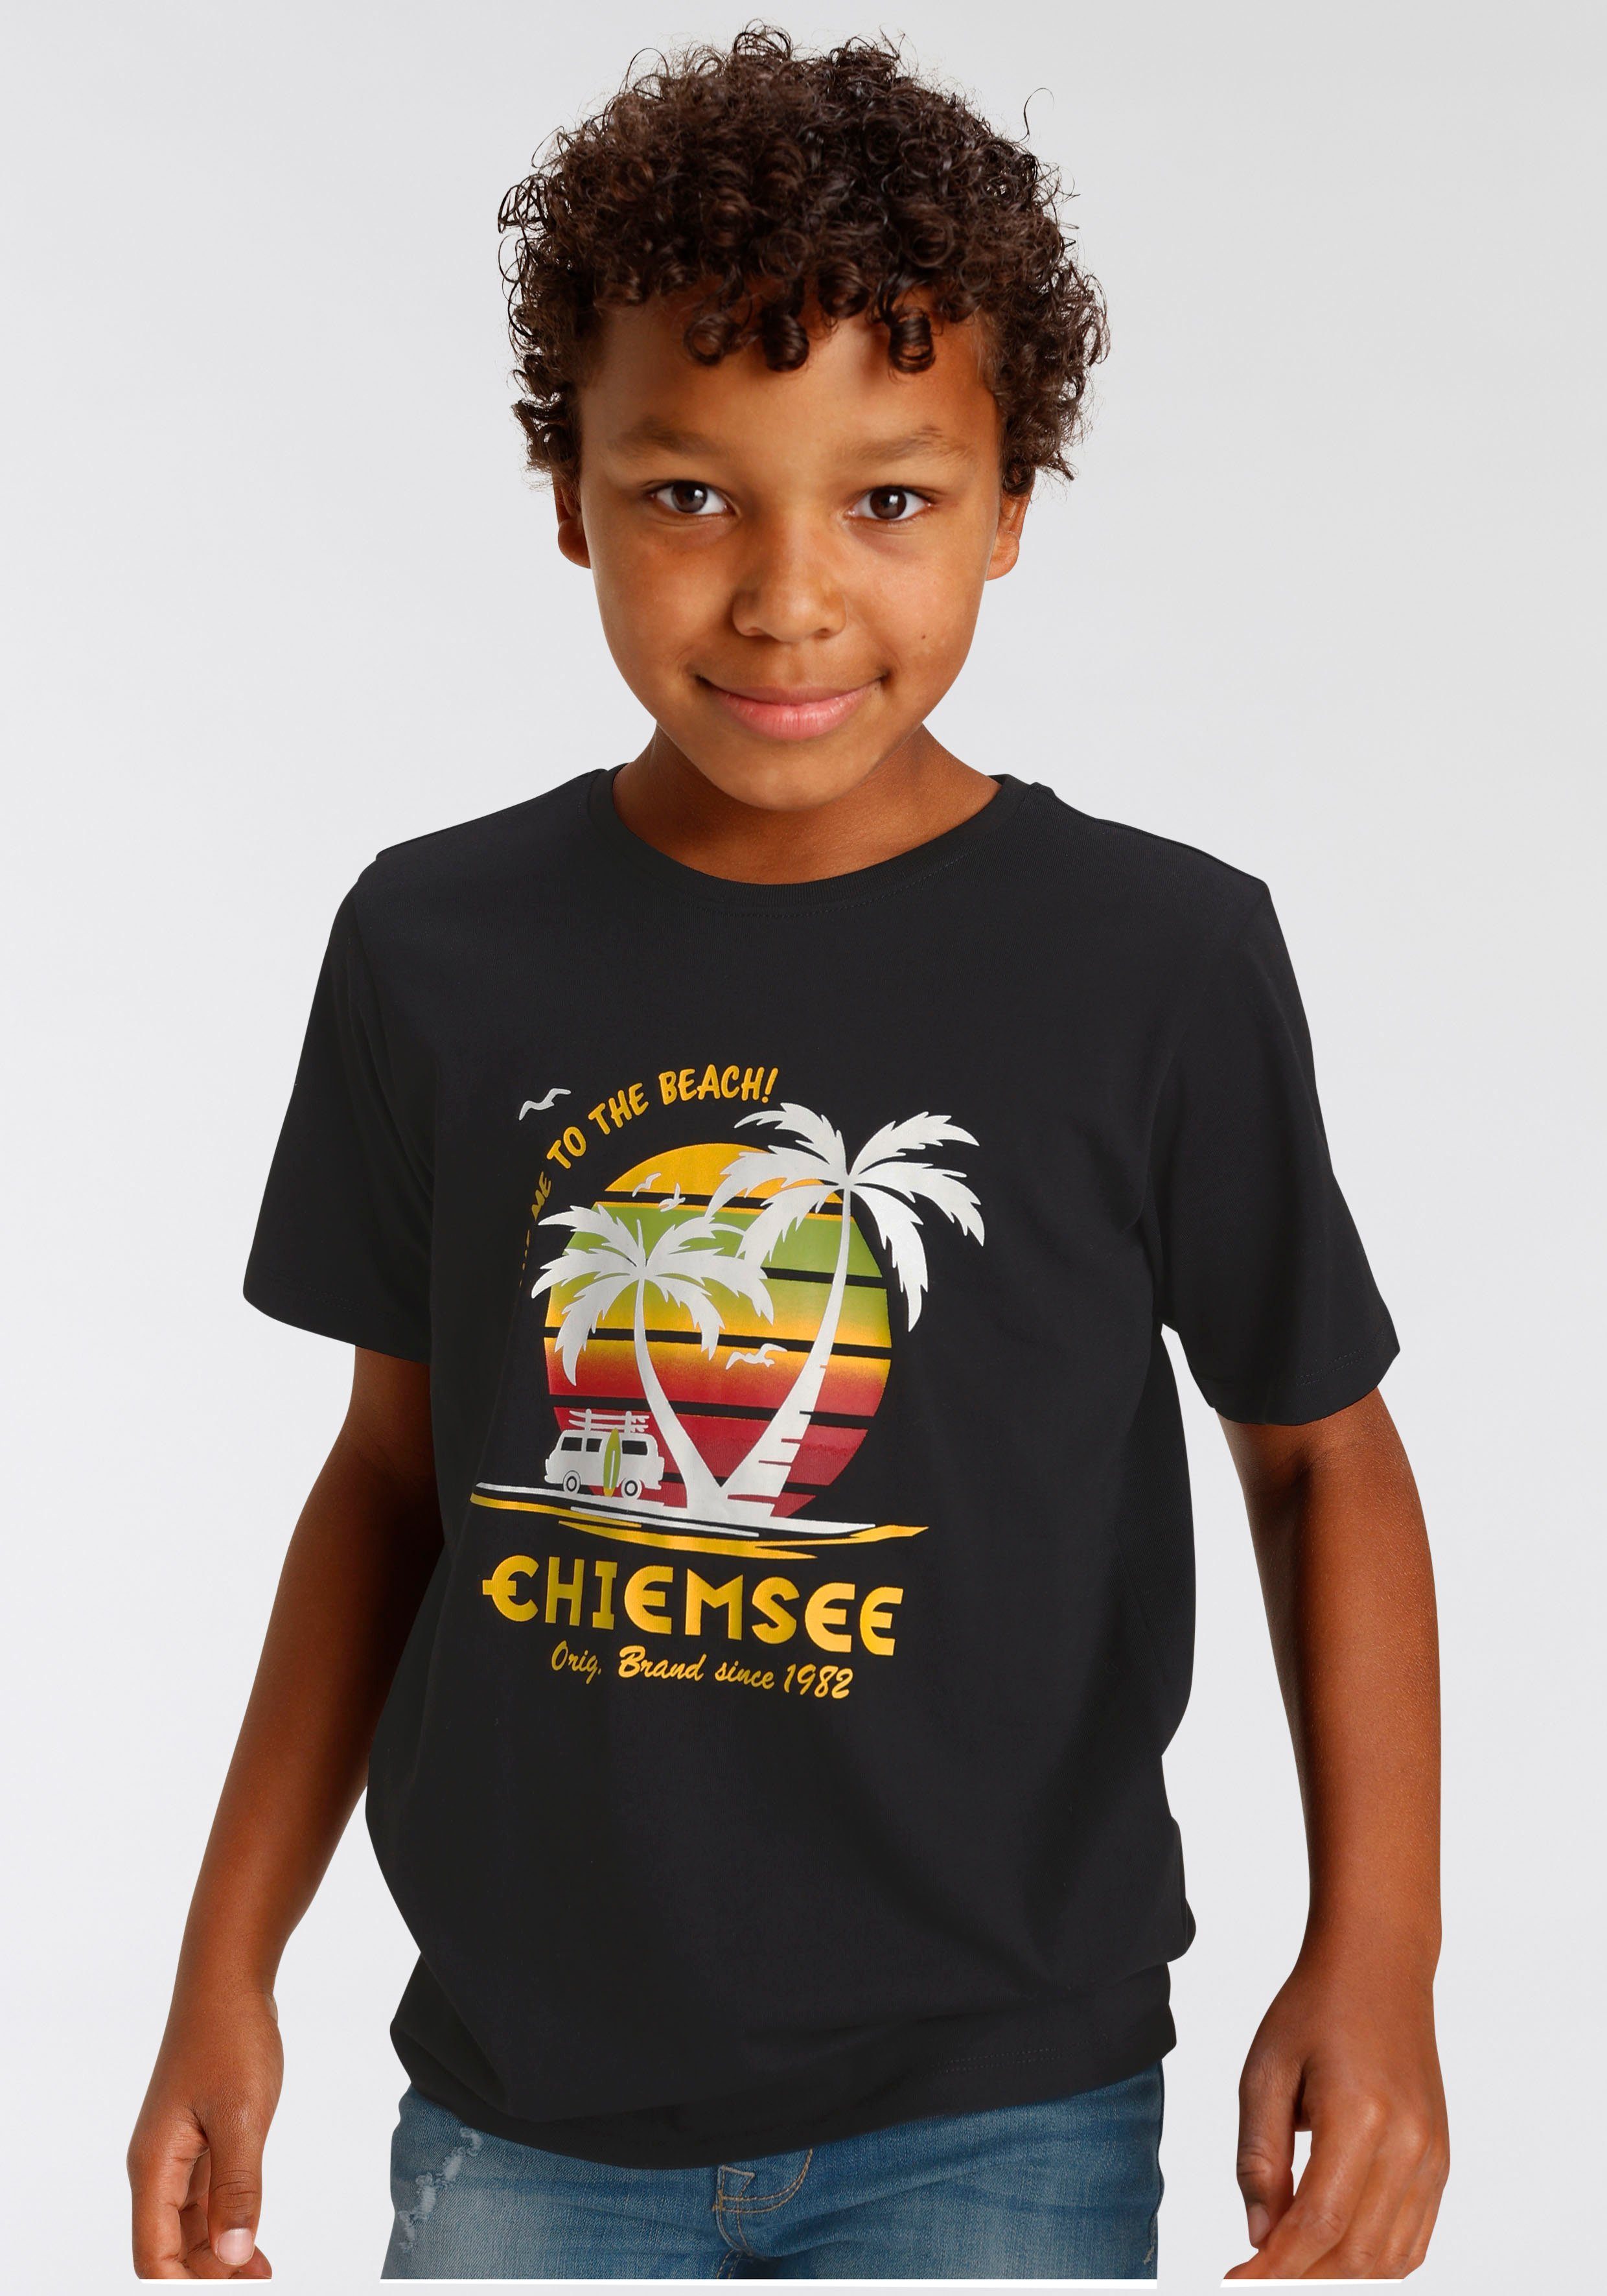 T-Shirt Chiemsee Palmenprint